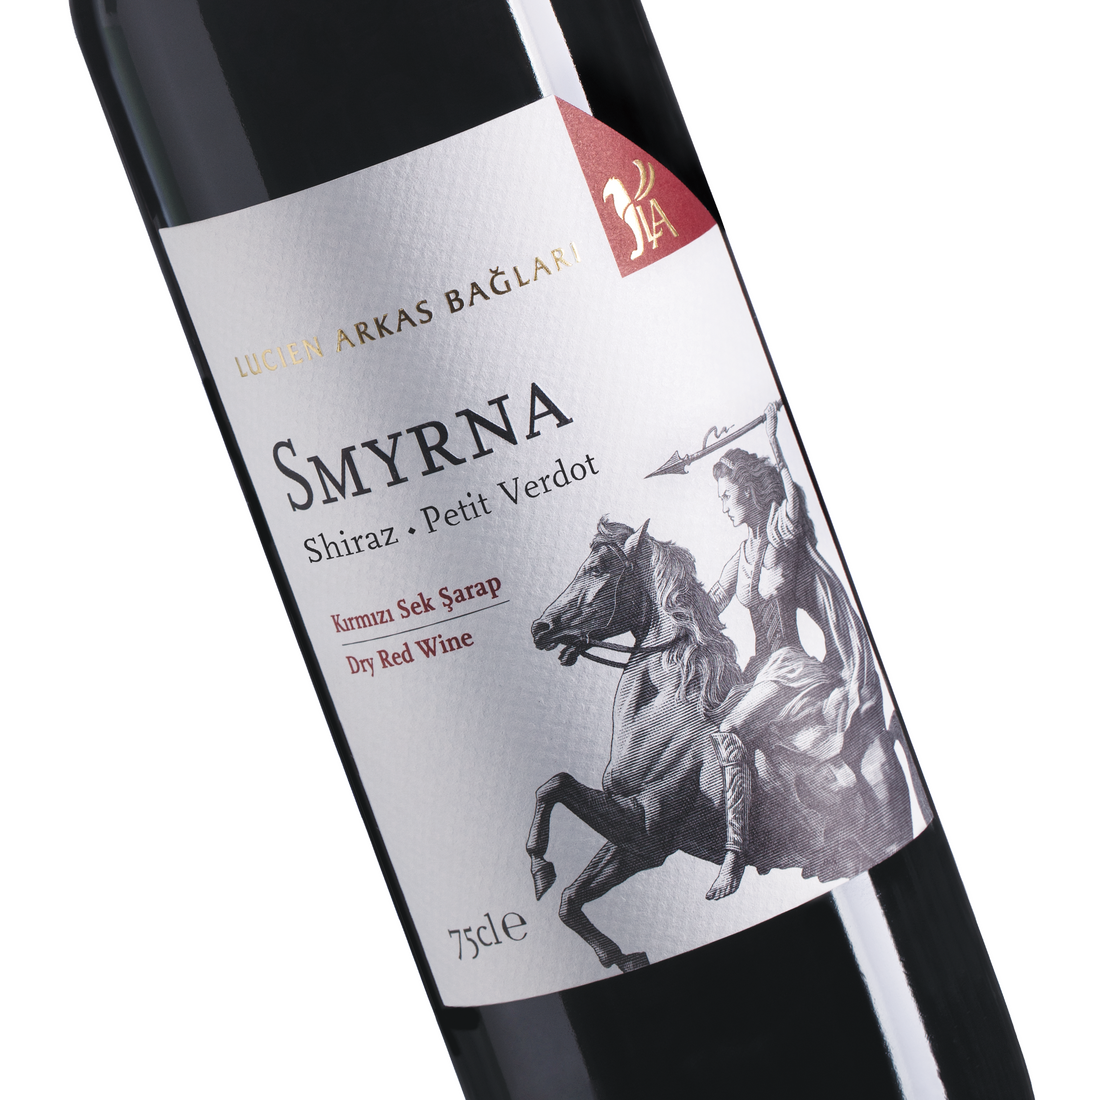 Lucien Arkas Smyrna Shiraz - Petit Verdot 750ml Dry Turkish Organic Red Wine | Lucien Arkas Smyrna Kirmizi Sek Sarap | Dry Red Wine